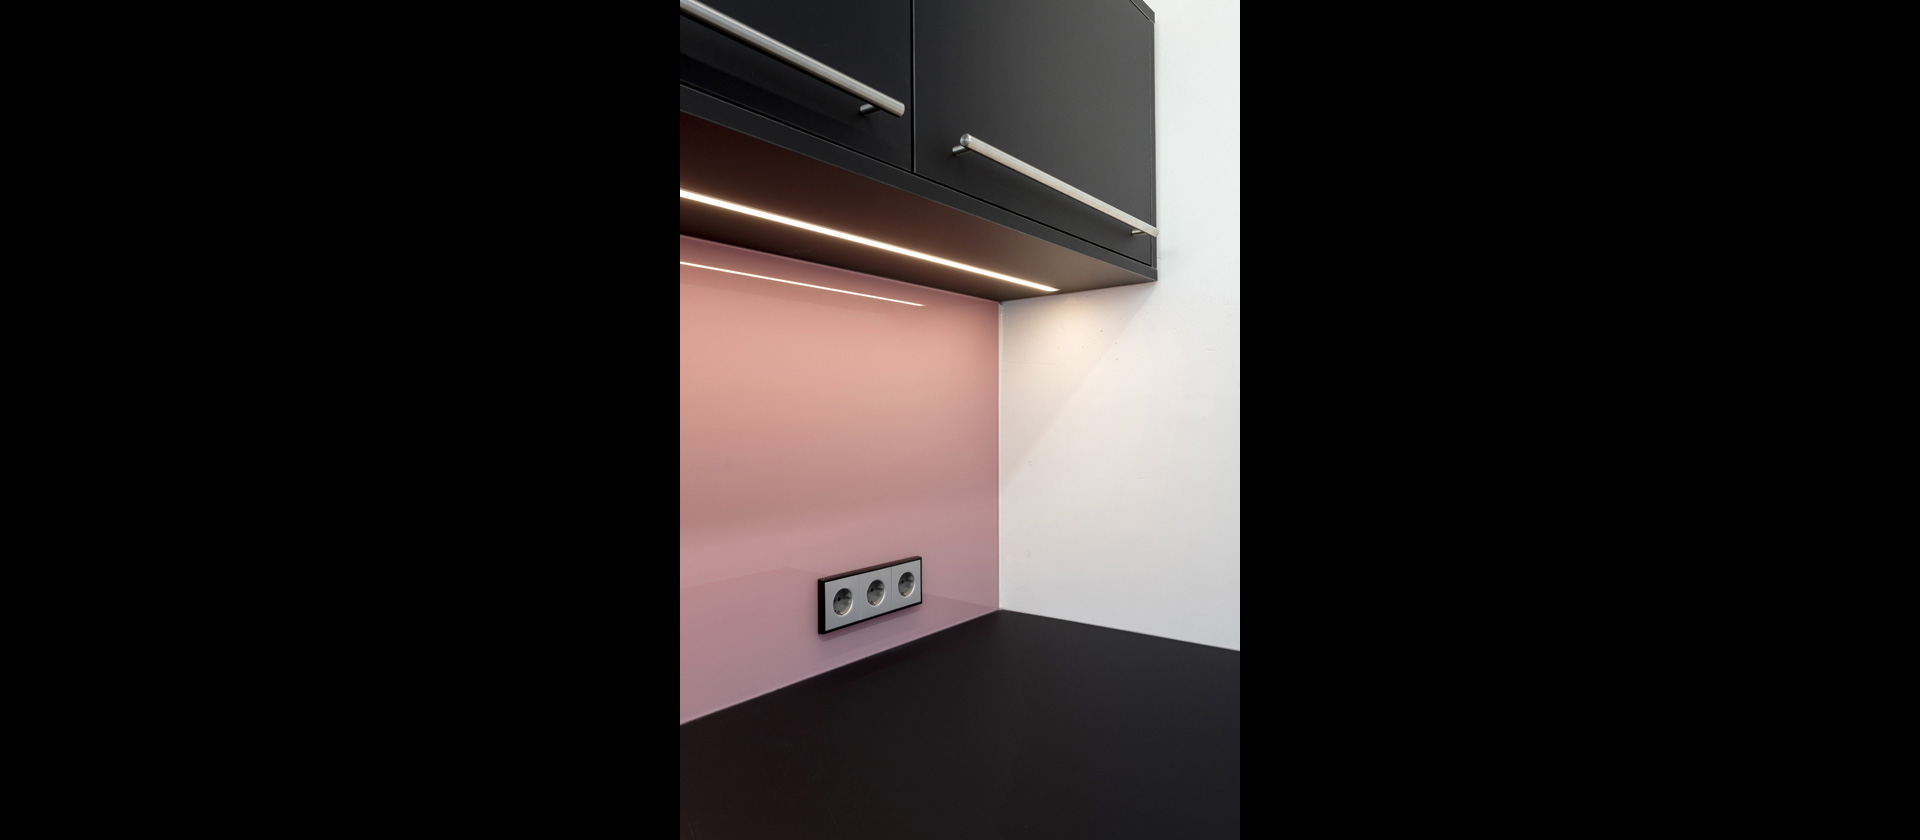 MTB-Küche Lino-Oberflächen